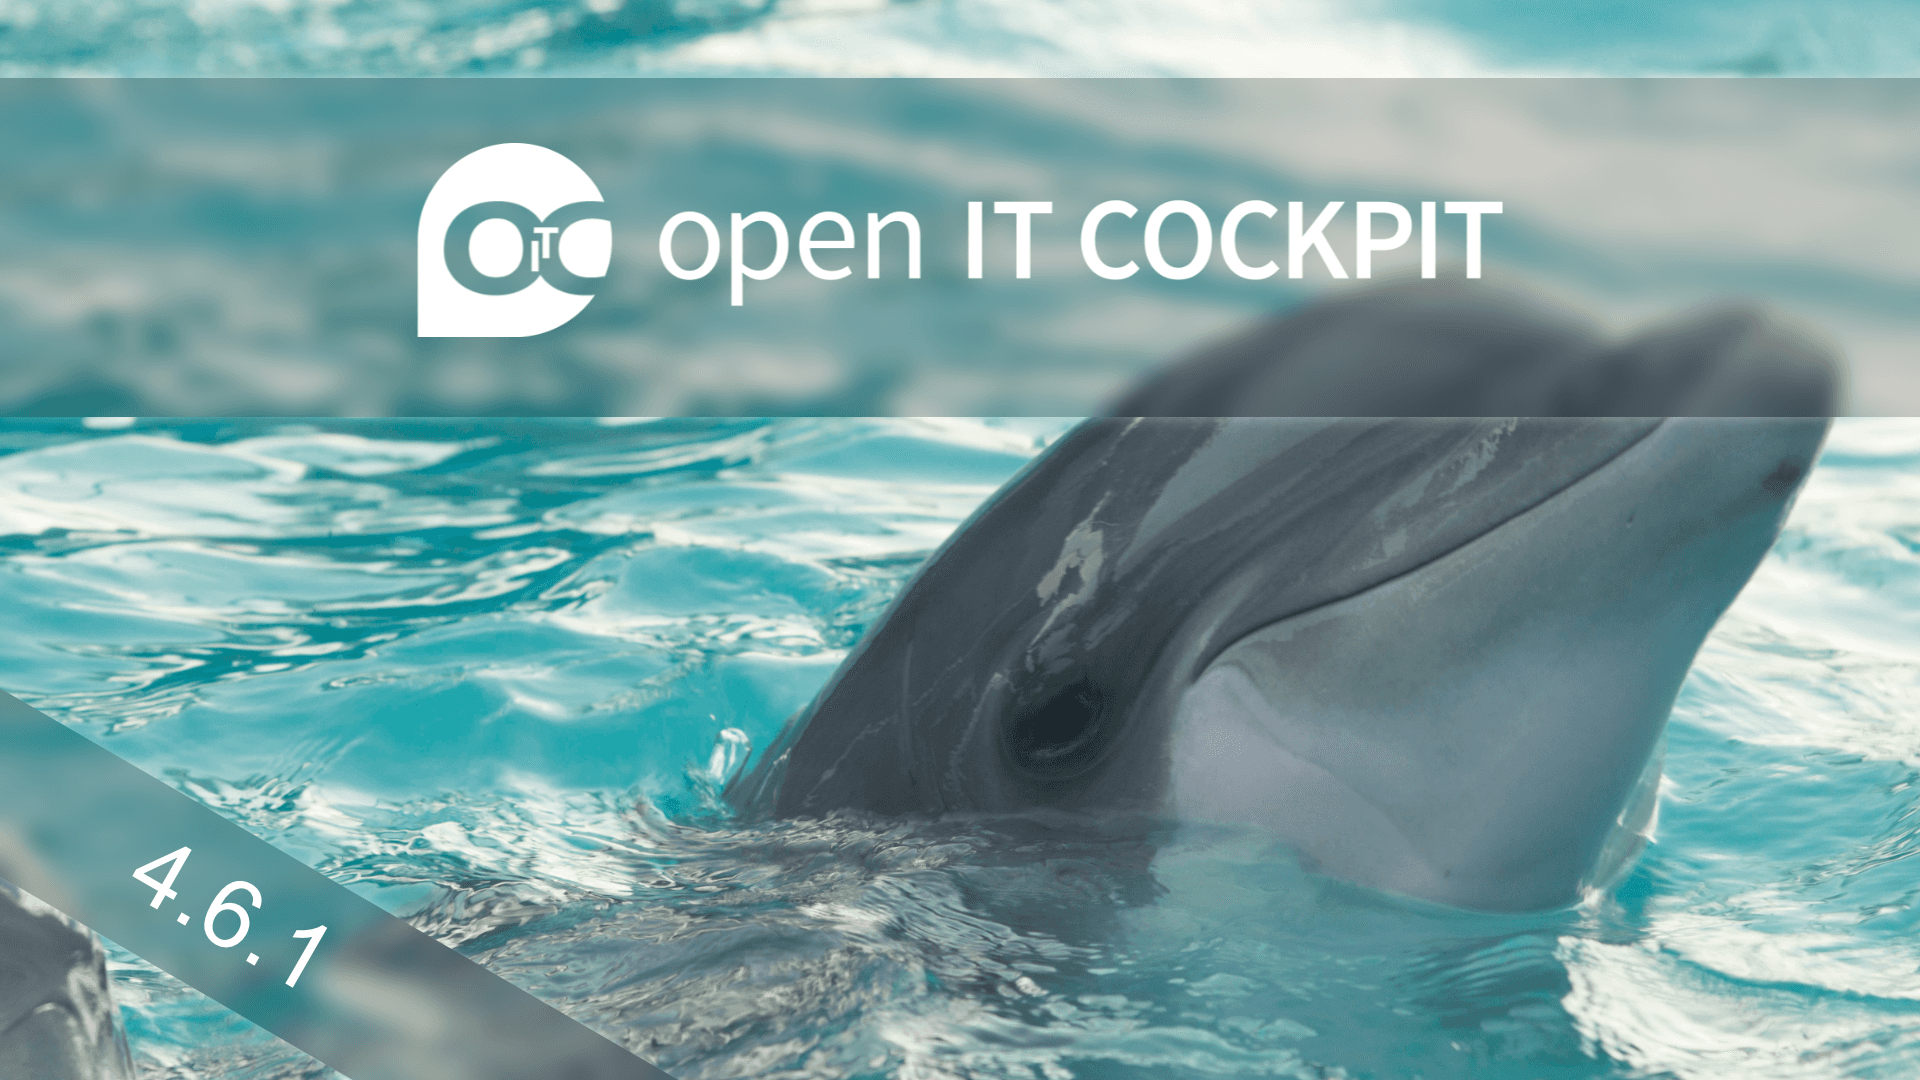 openITCOCKPIT 4.6.1 released